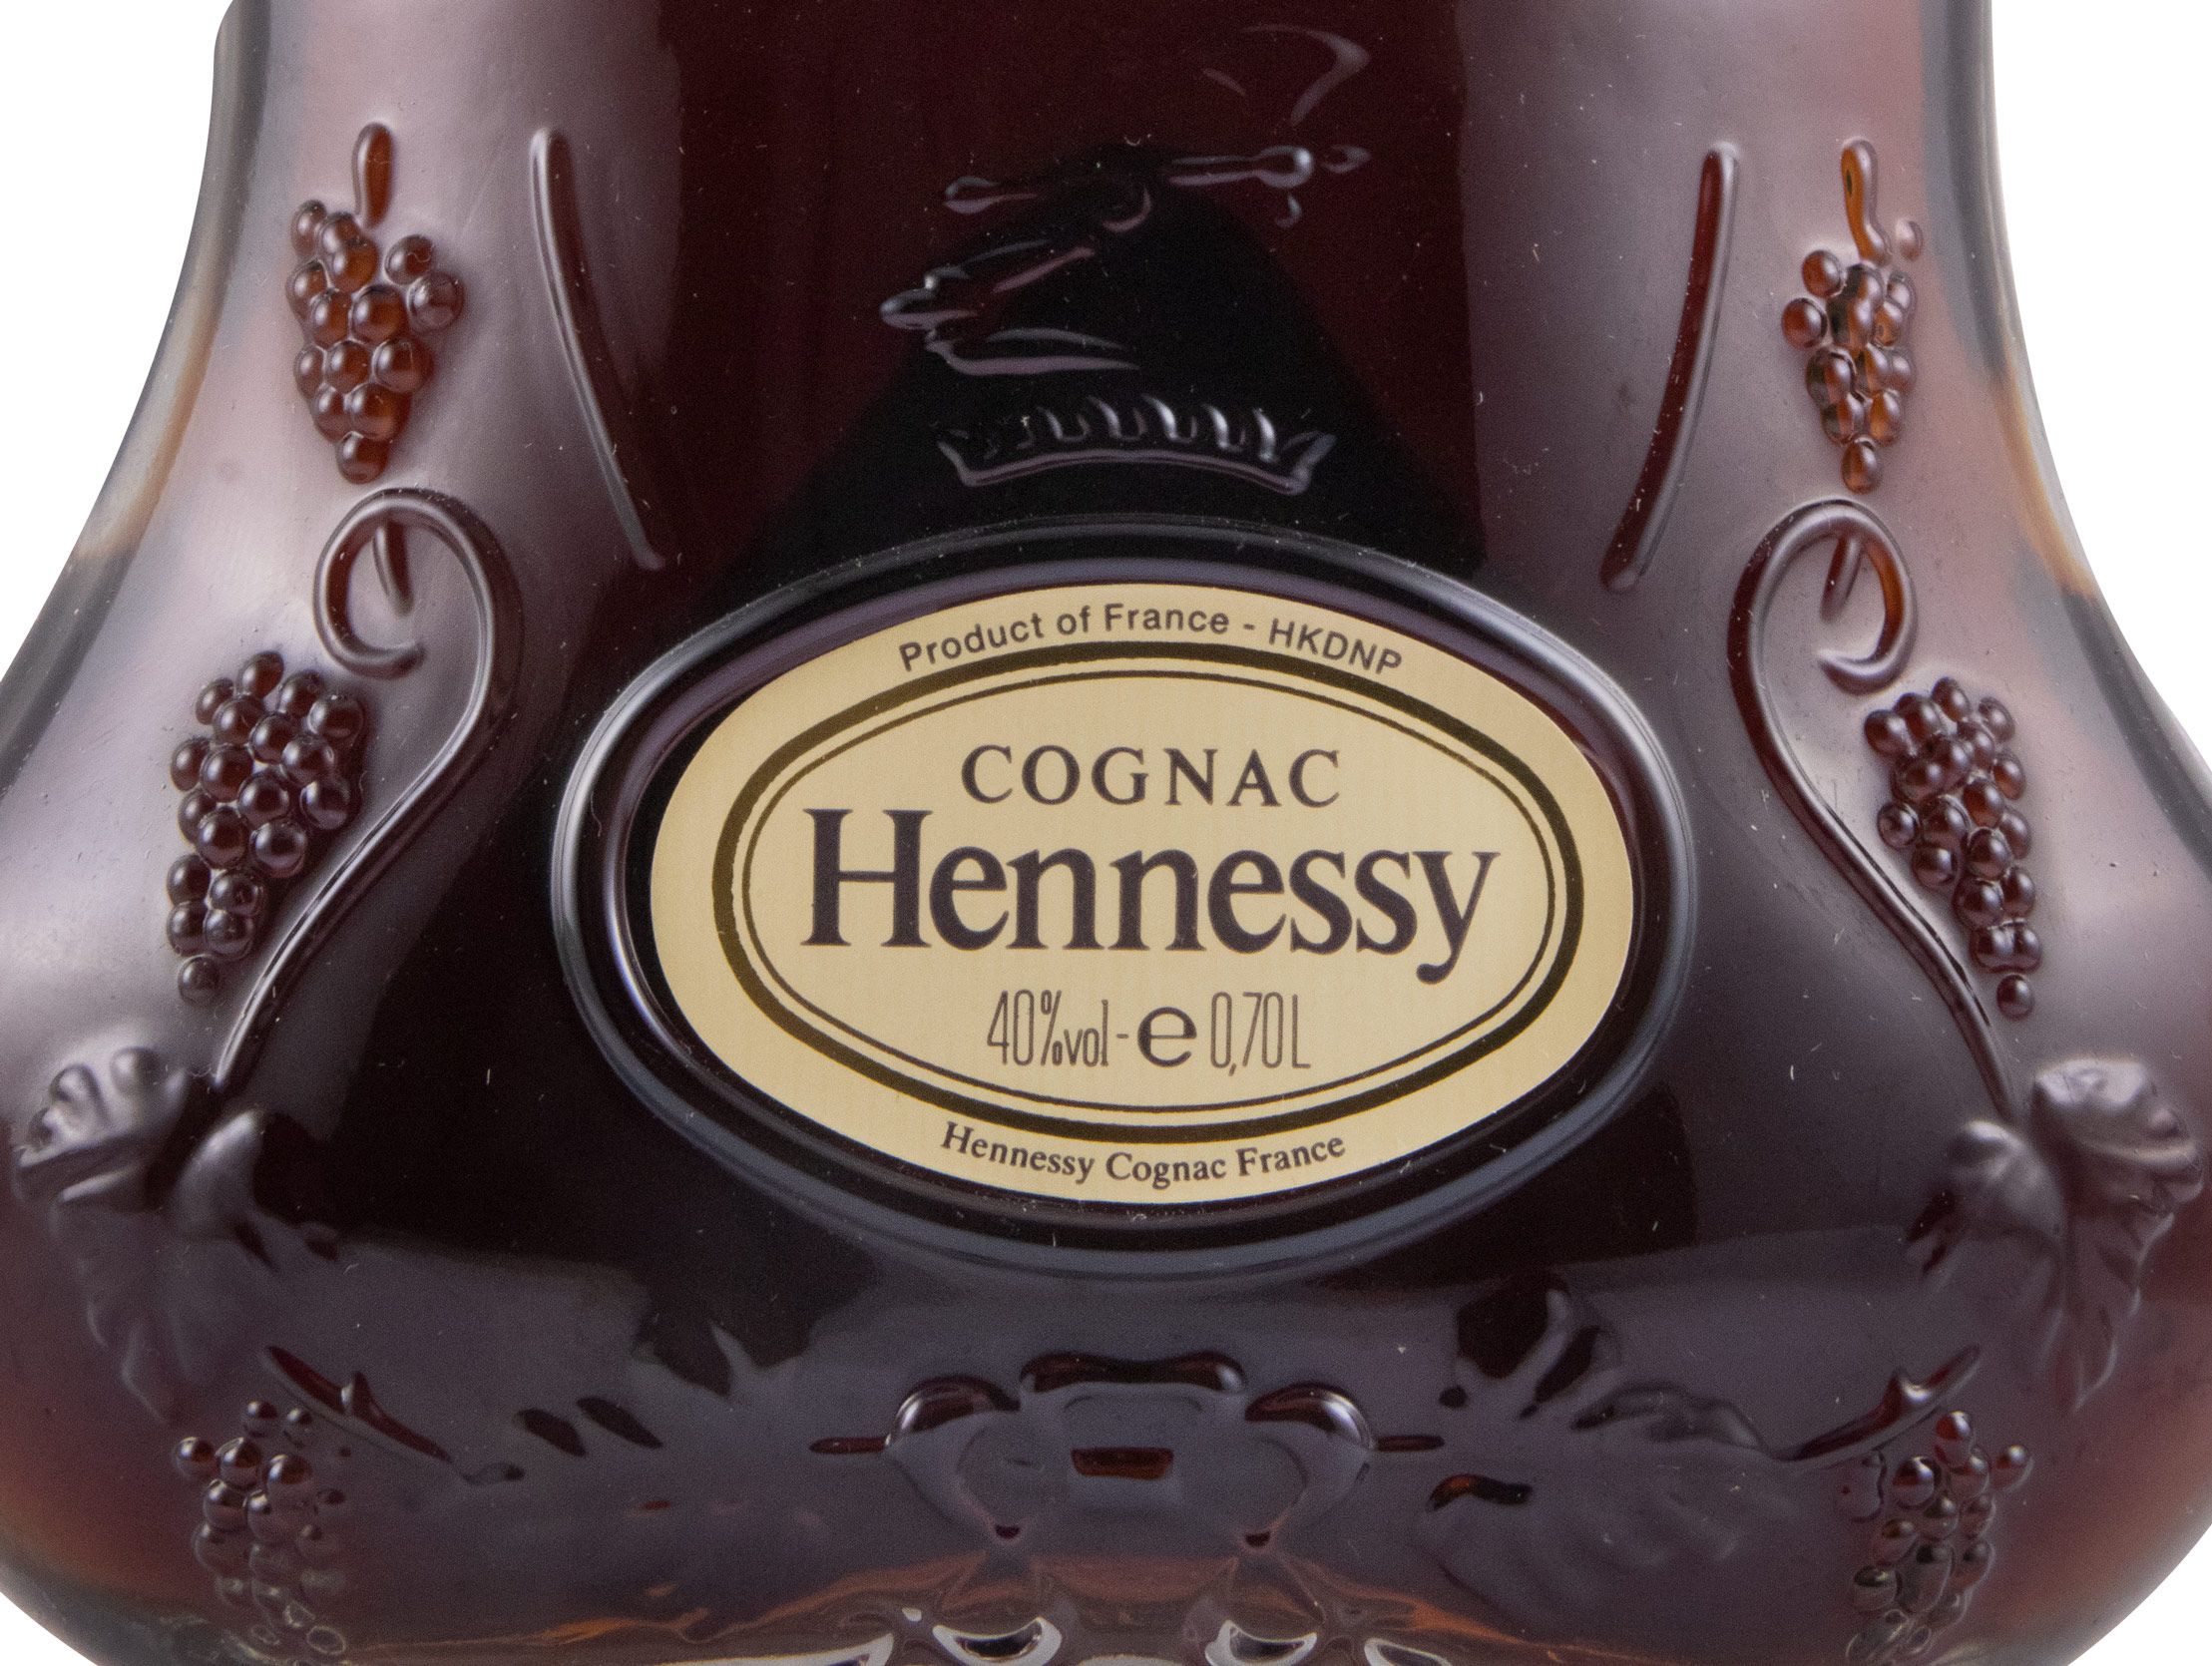 Cognac Hennessy XO (old bottle)